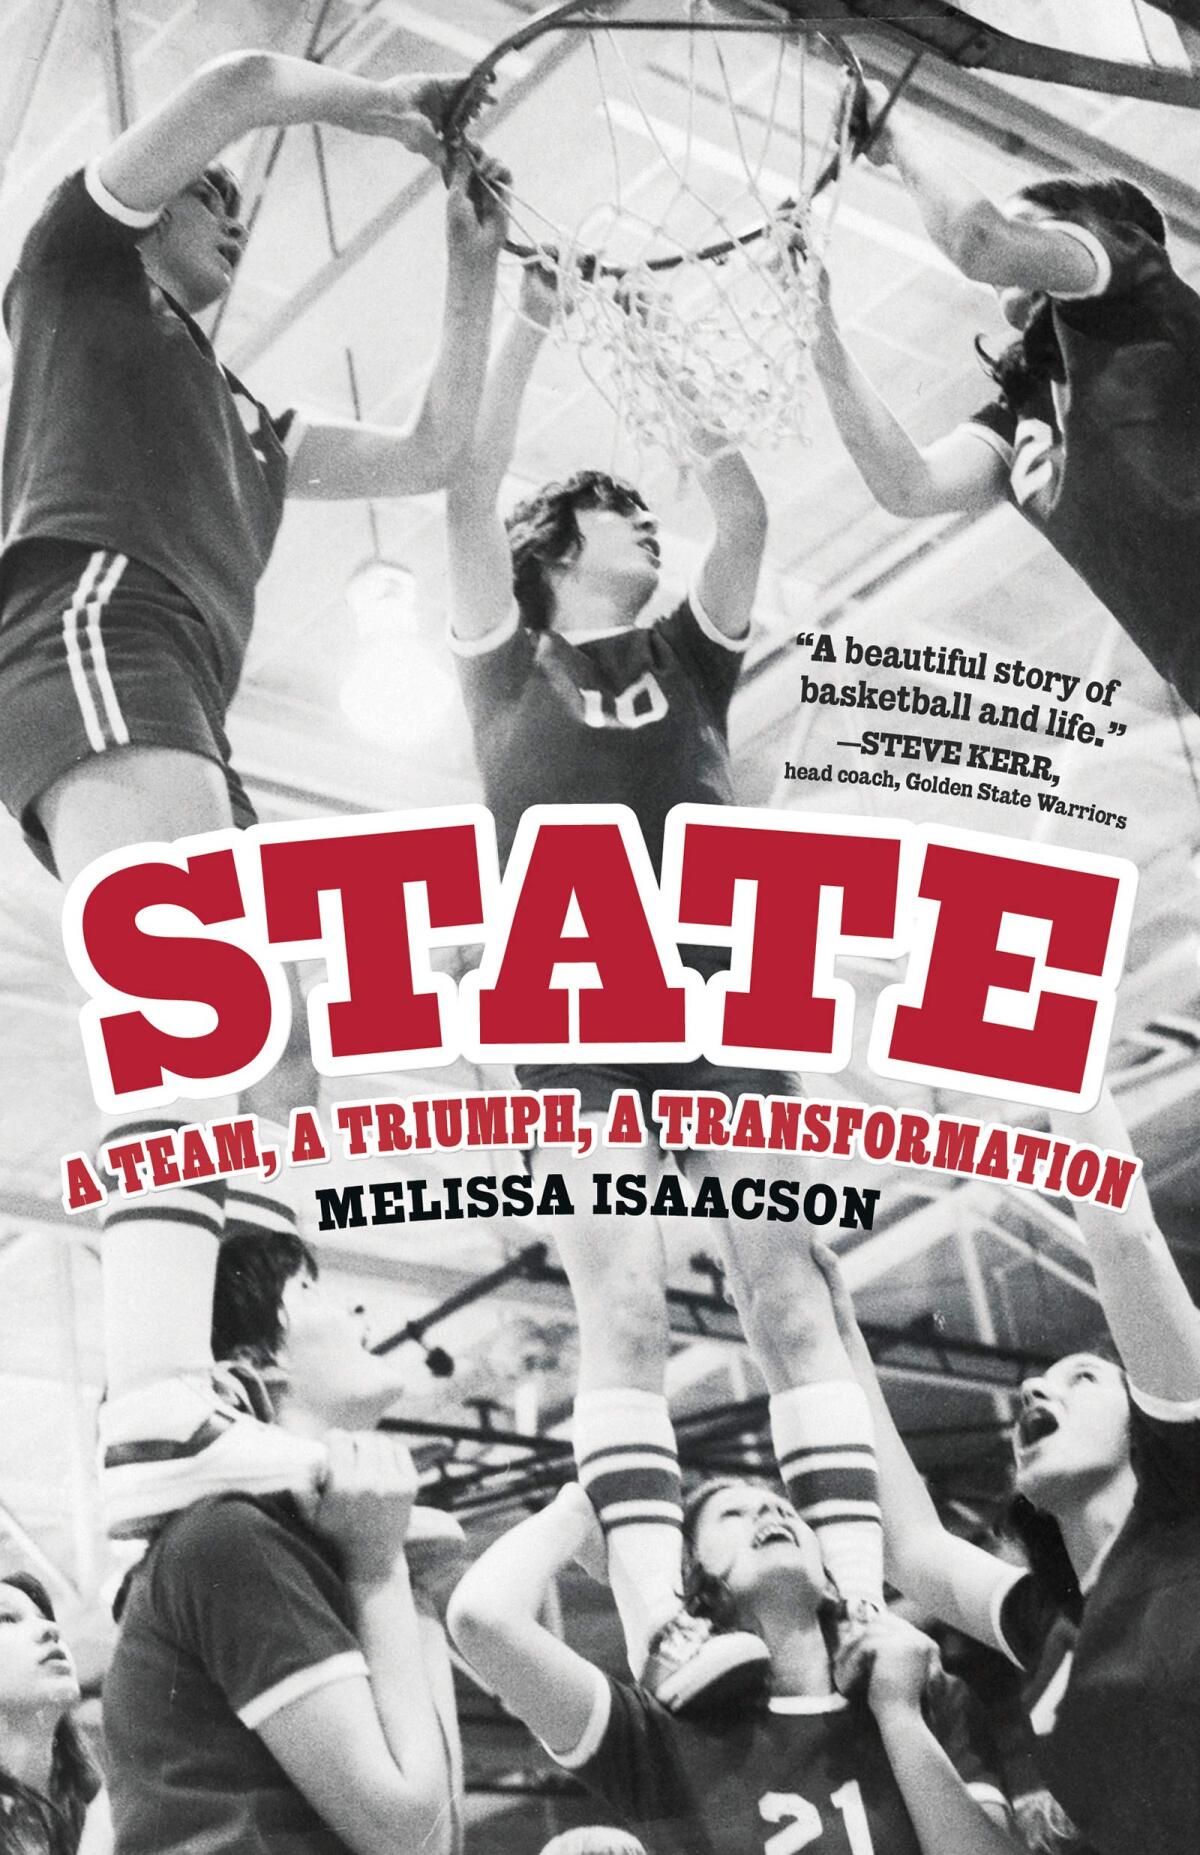 Cover art for “State: A Team, A Triumph, A Transformation.”